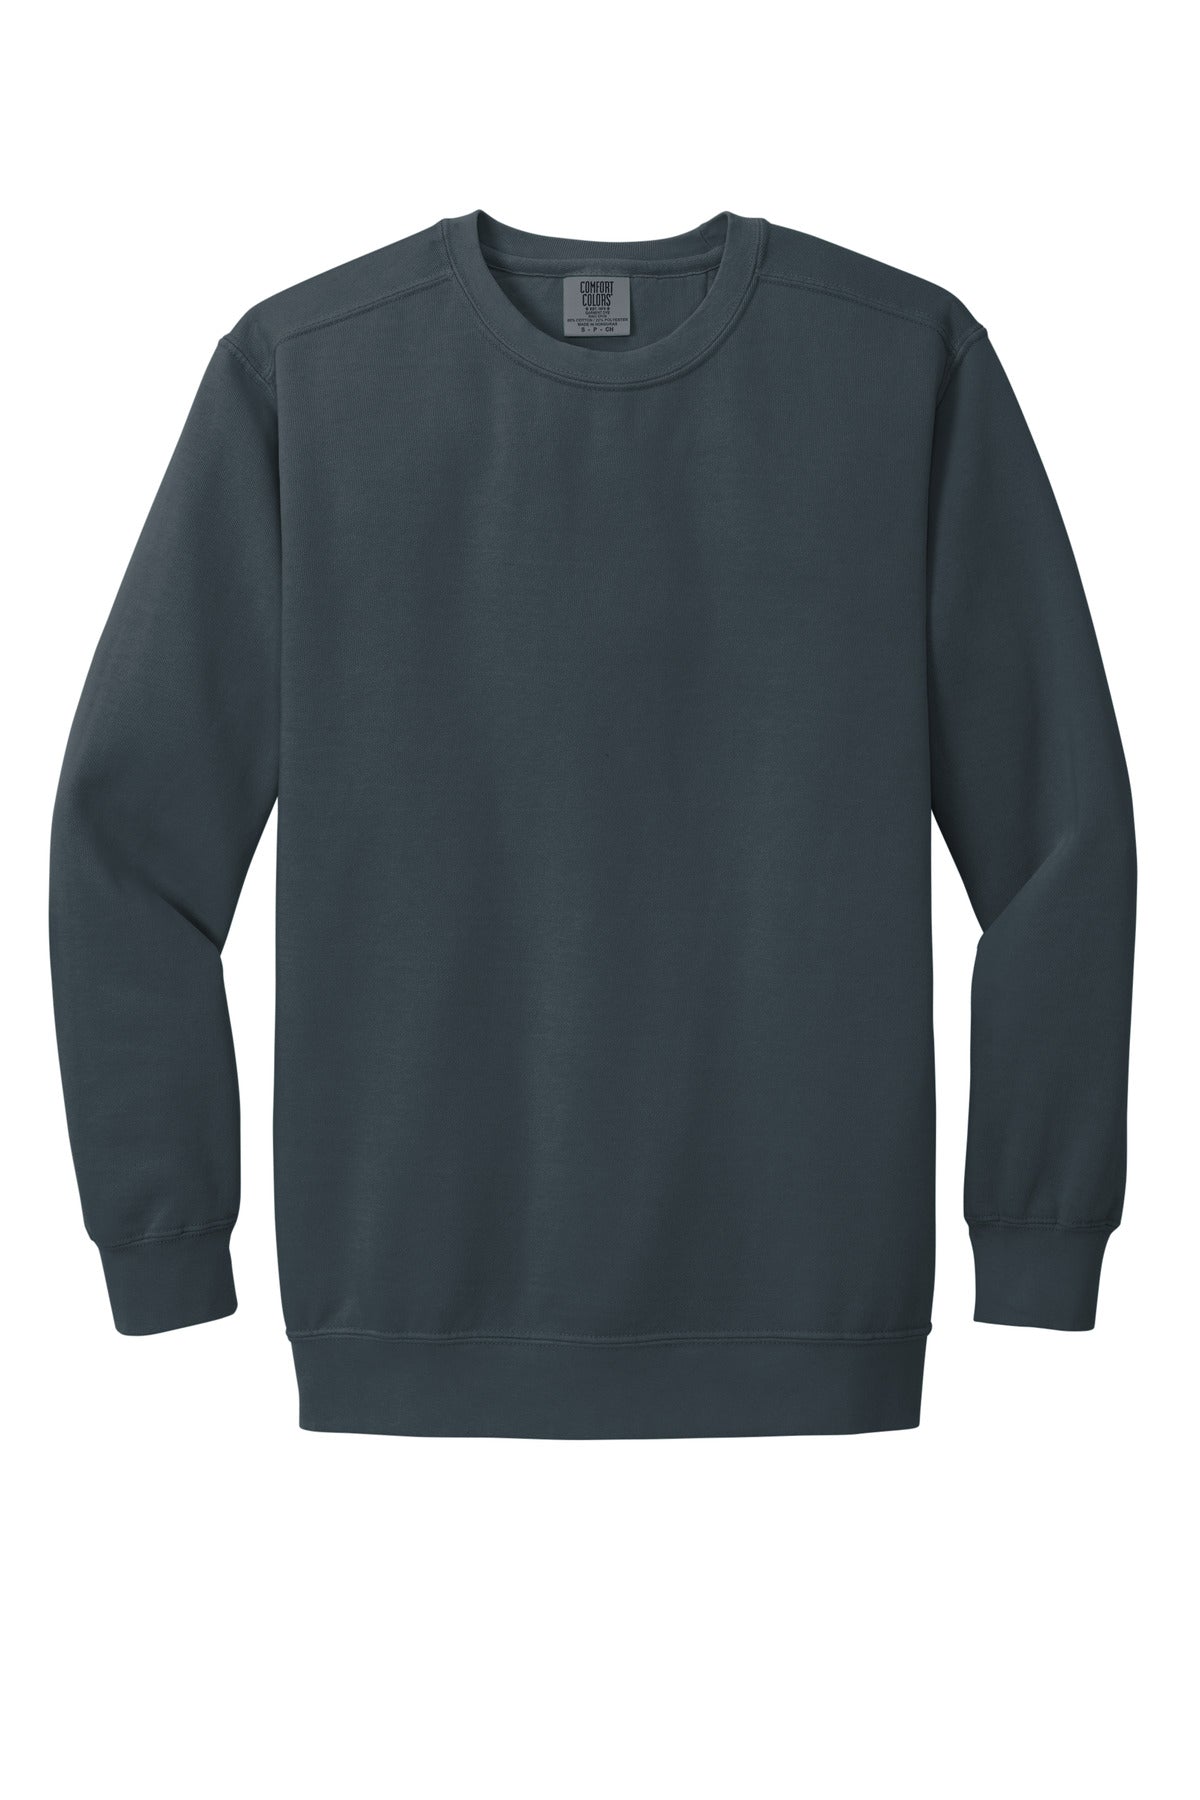 COMFORT COLORS ® Ring Spun Crewneck Sweatshirt